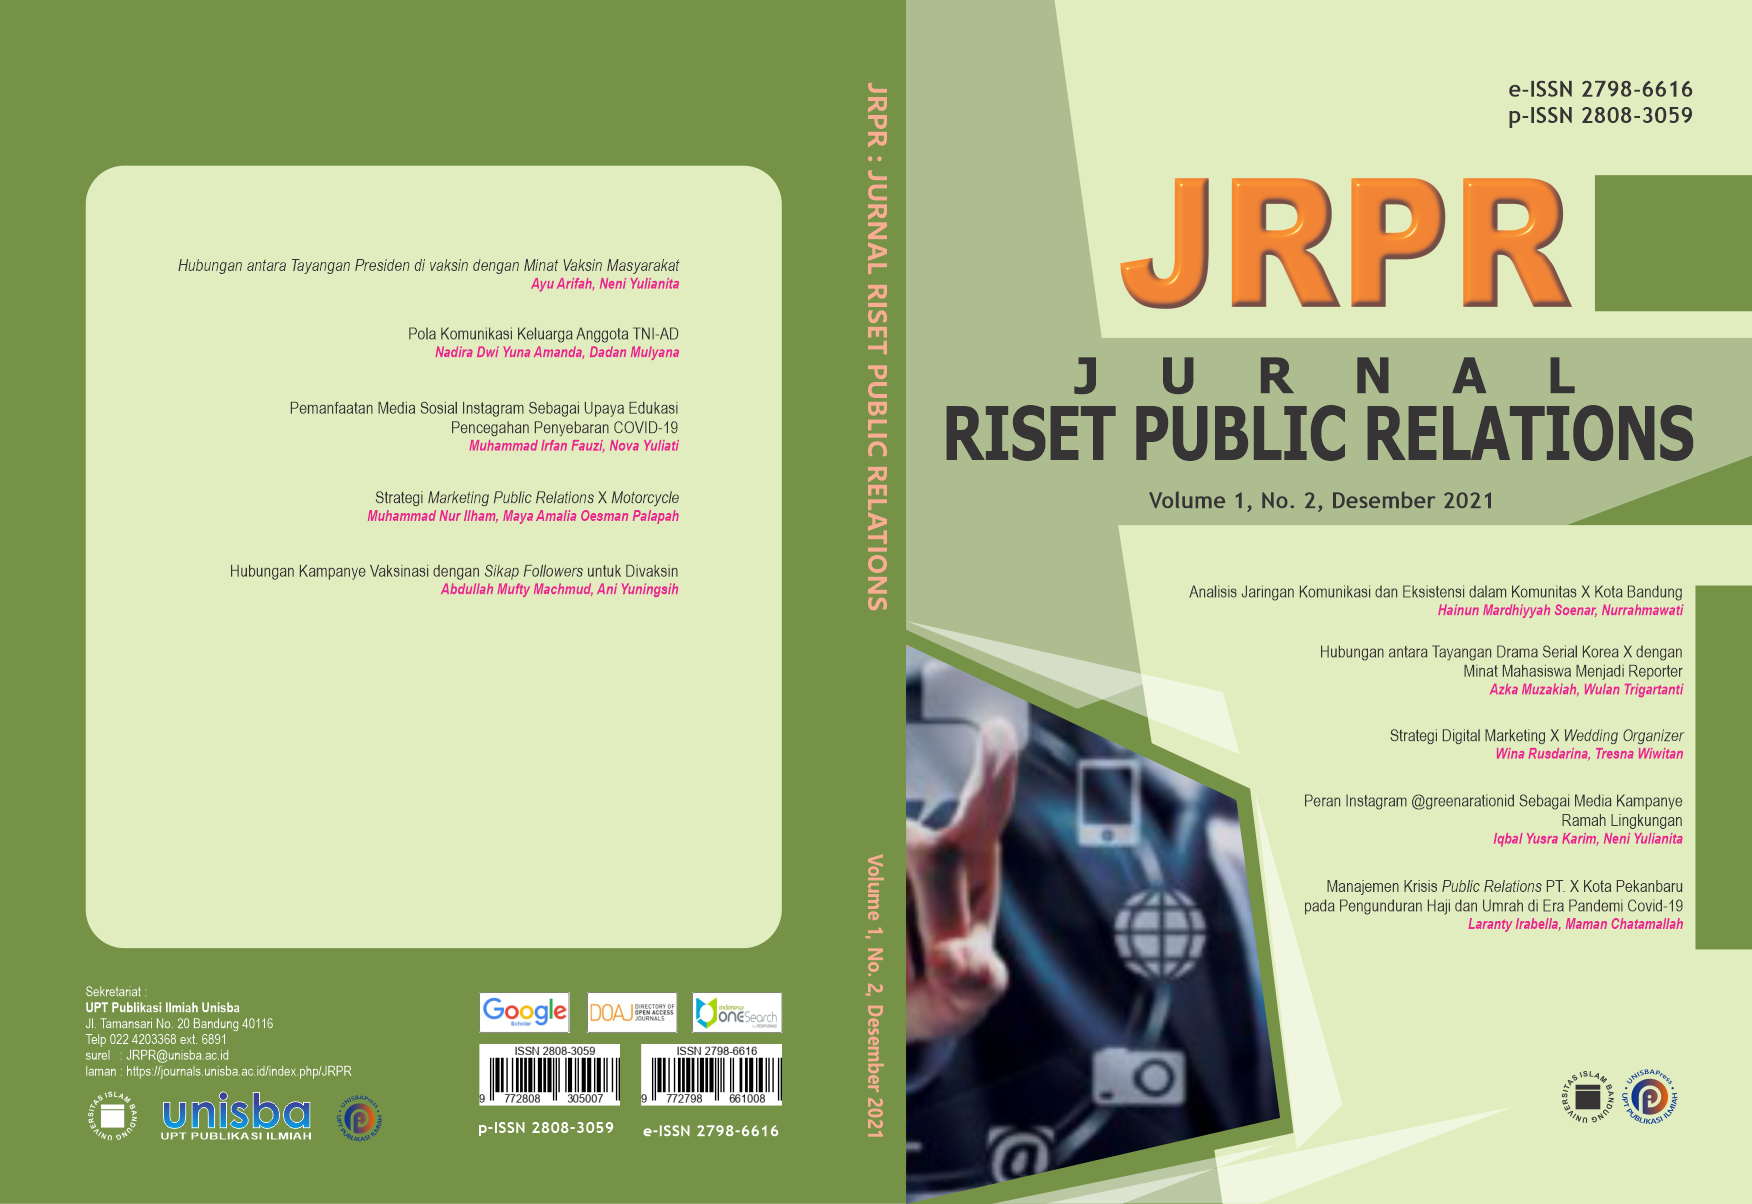 					View Volume 1, No. 2, Desember 2021, Jurnal Riset Public Relations (JRPR)
				